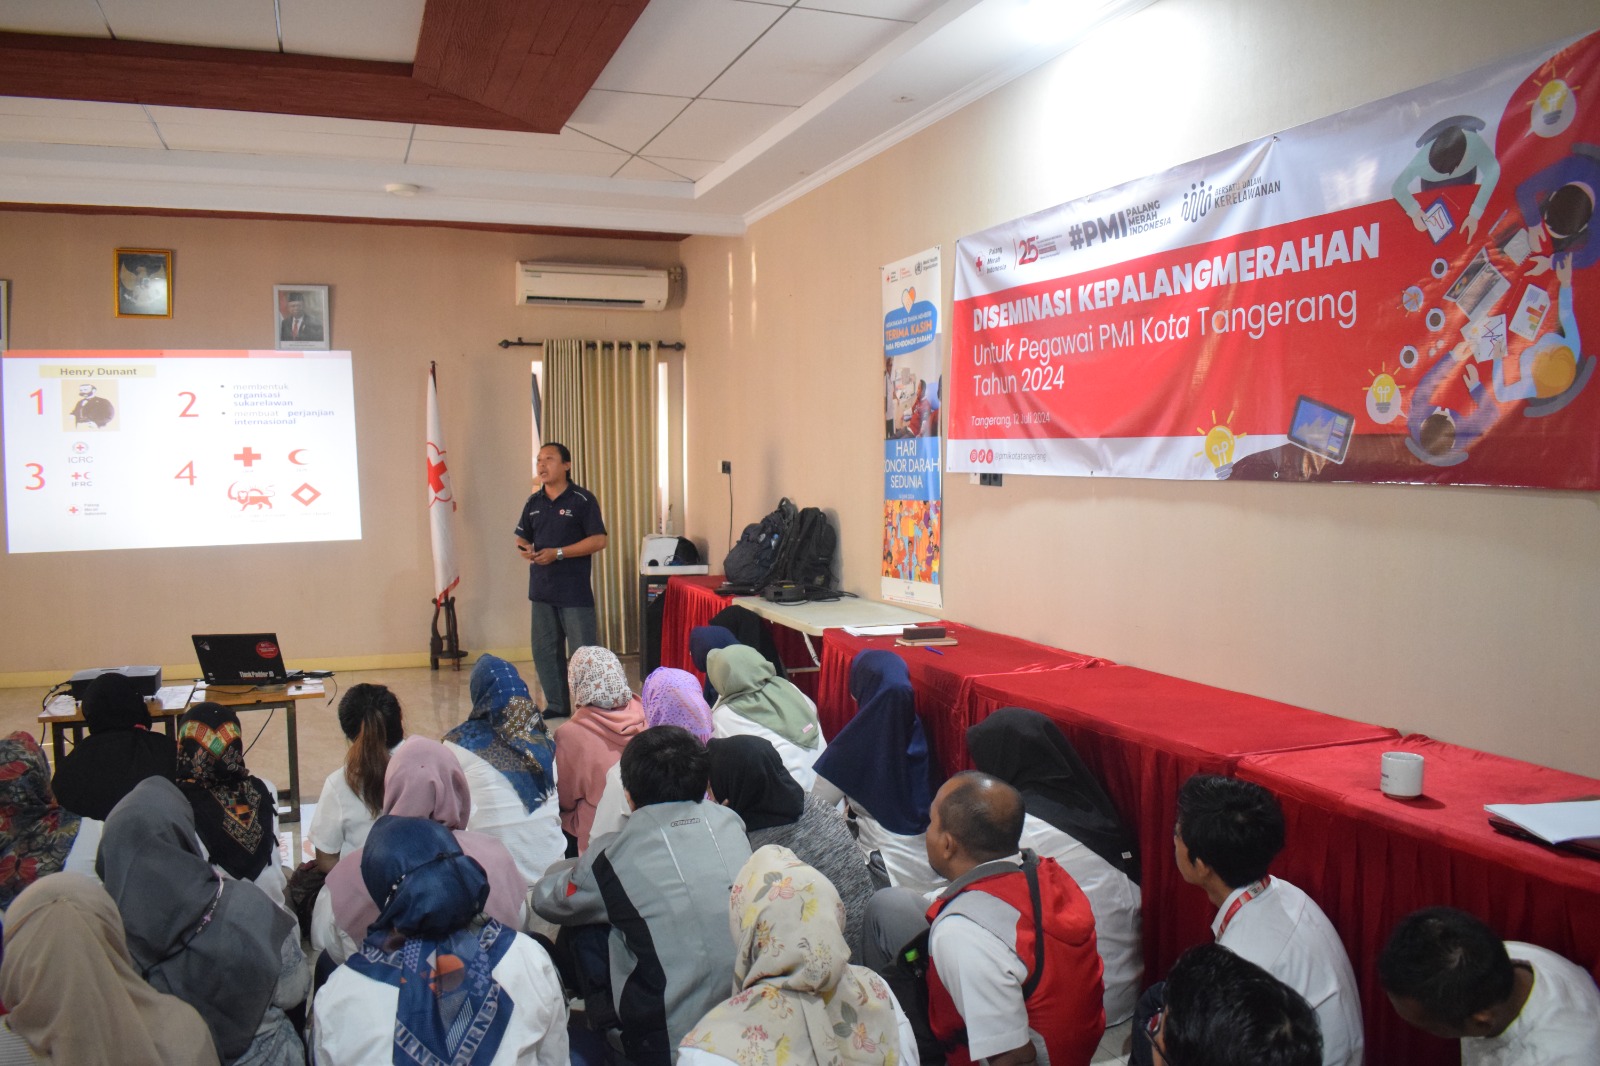 PMI Kota Tangerang Adakan Sosialisasi Kepalang Merahan Bagi Karyawan dan Relawan